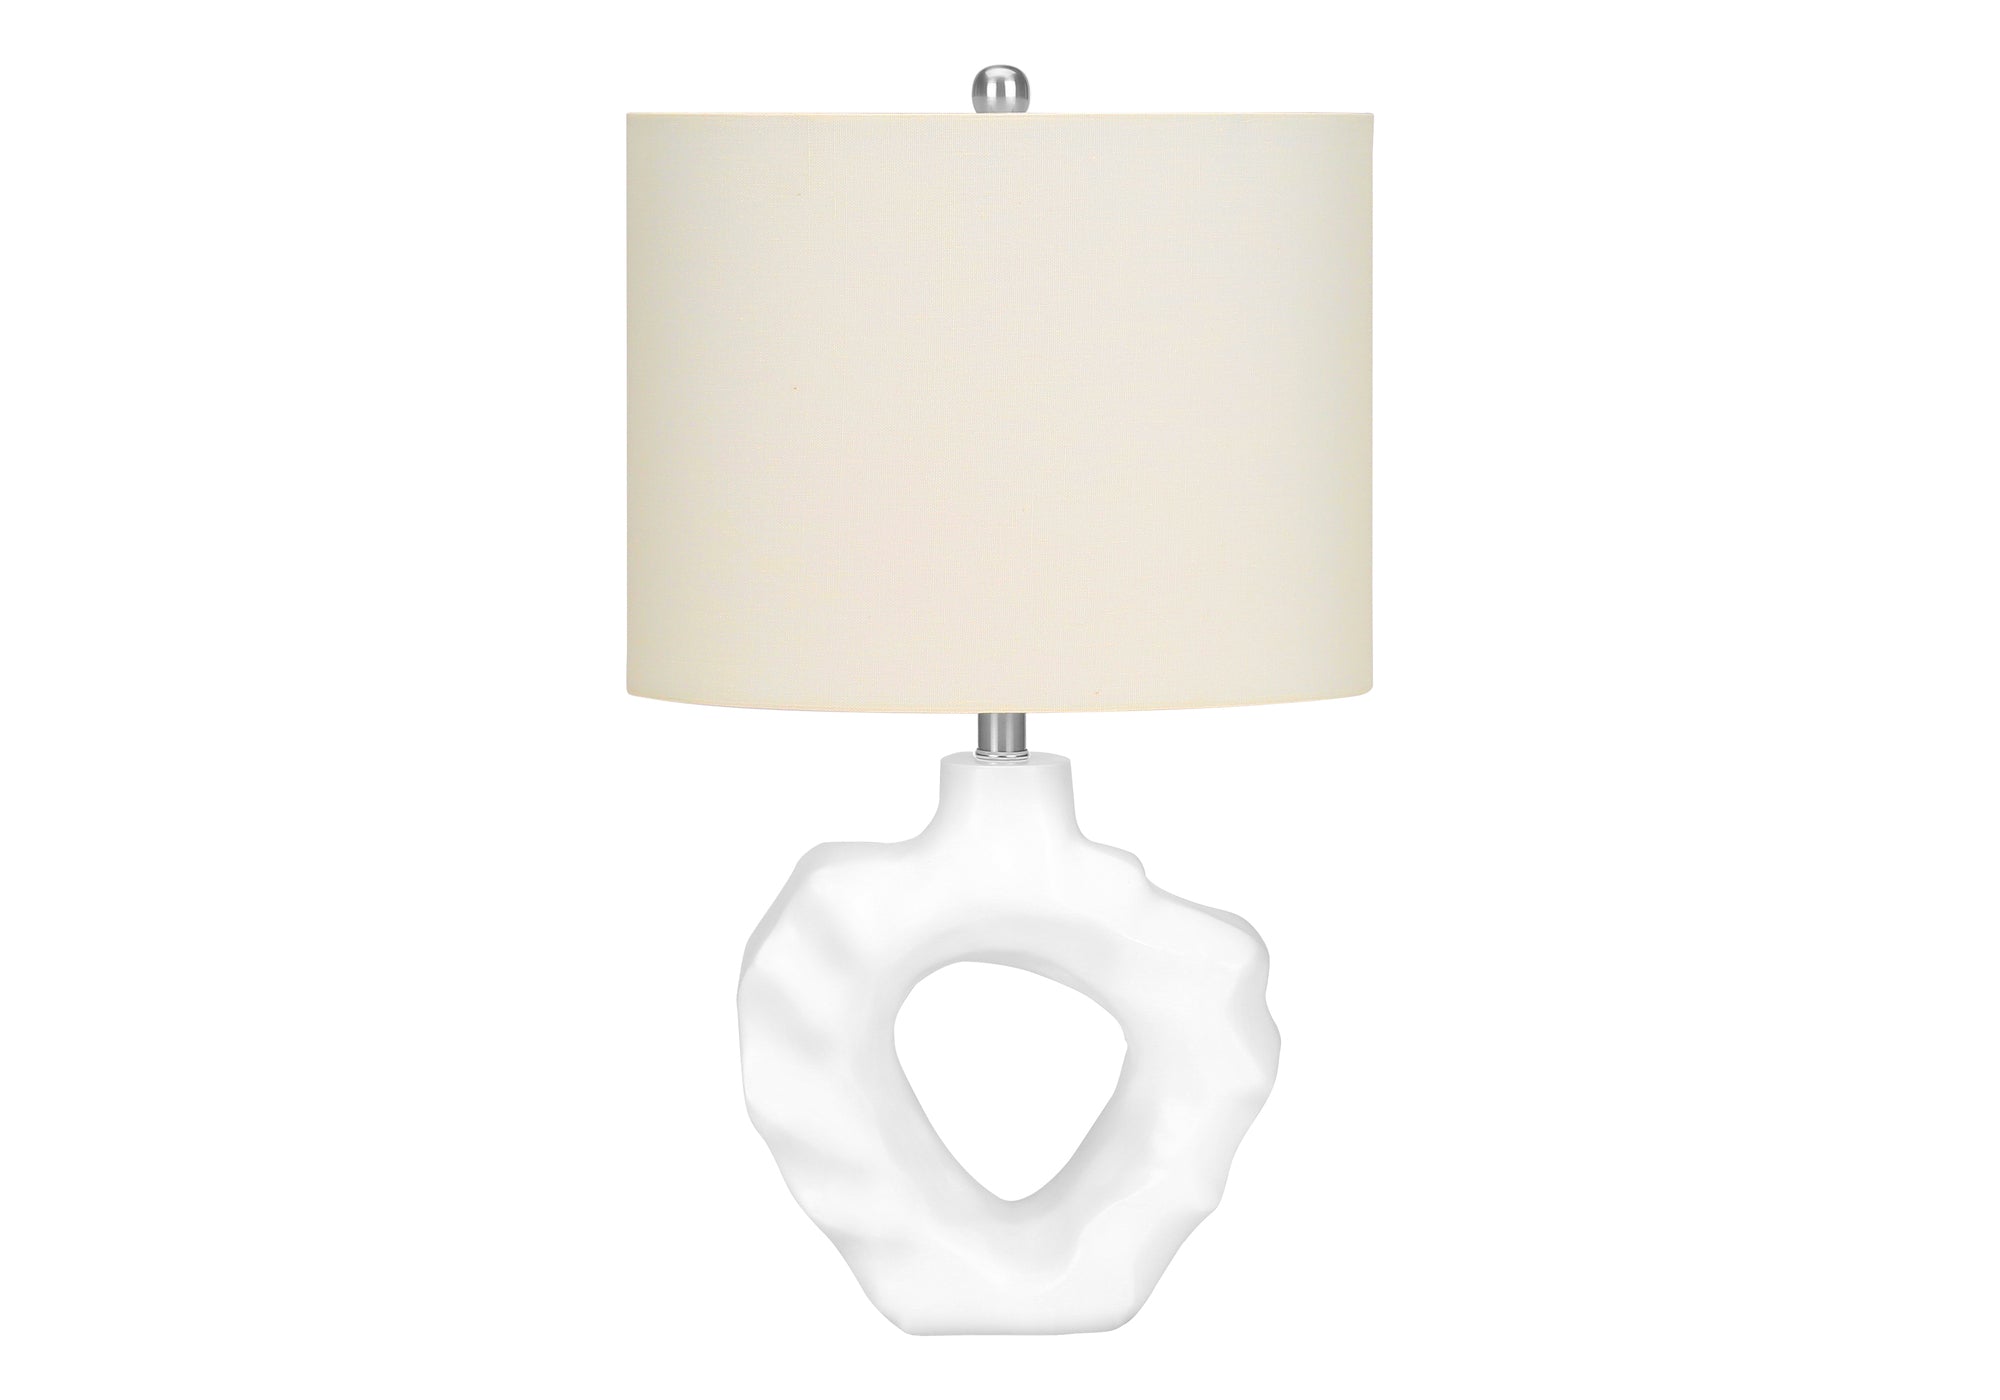 MN-619727    Lighting, 25"H, Table Lamp, Cream Resin, Ivory / Cream Shade, Modern